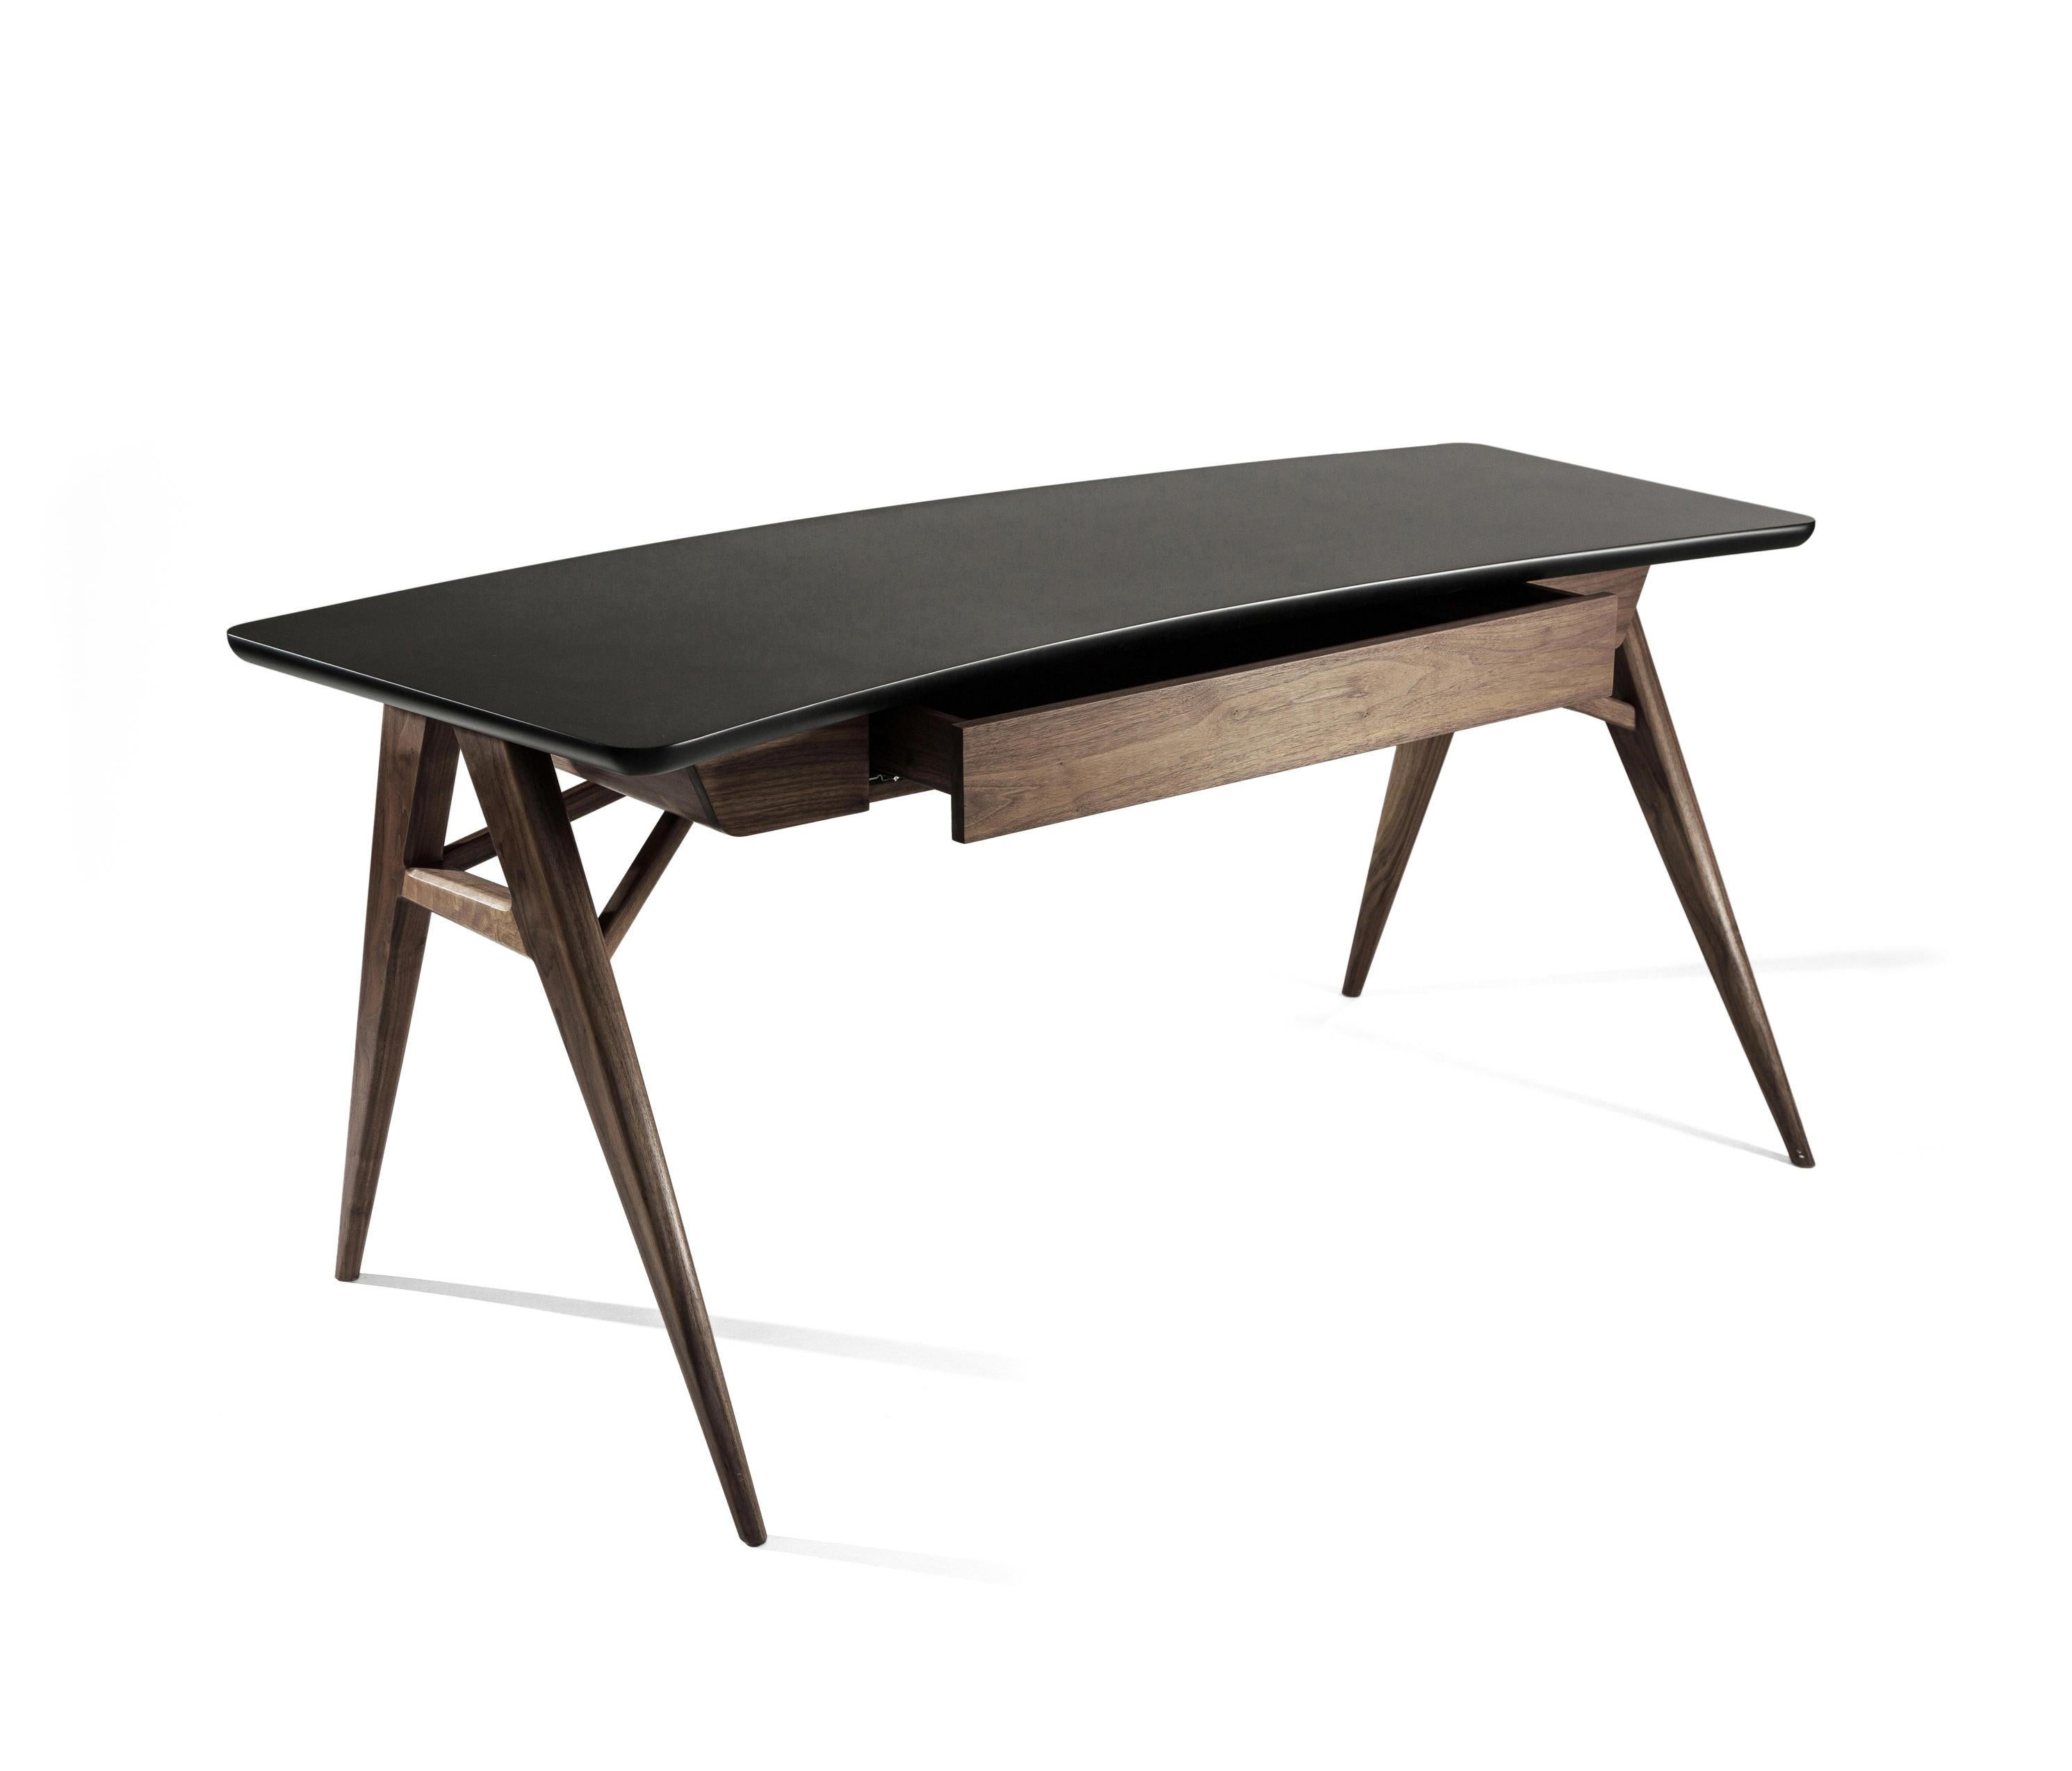 The Roos desk in Wood by Alexander Diaz Anderson


Dimensions: 
L 182.6cm/71.8”
W 78.1cm/30.7”
H 74.9cm/29.4”